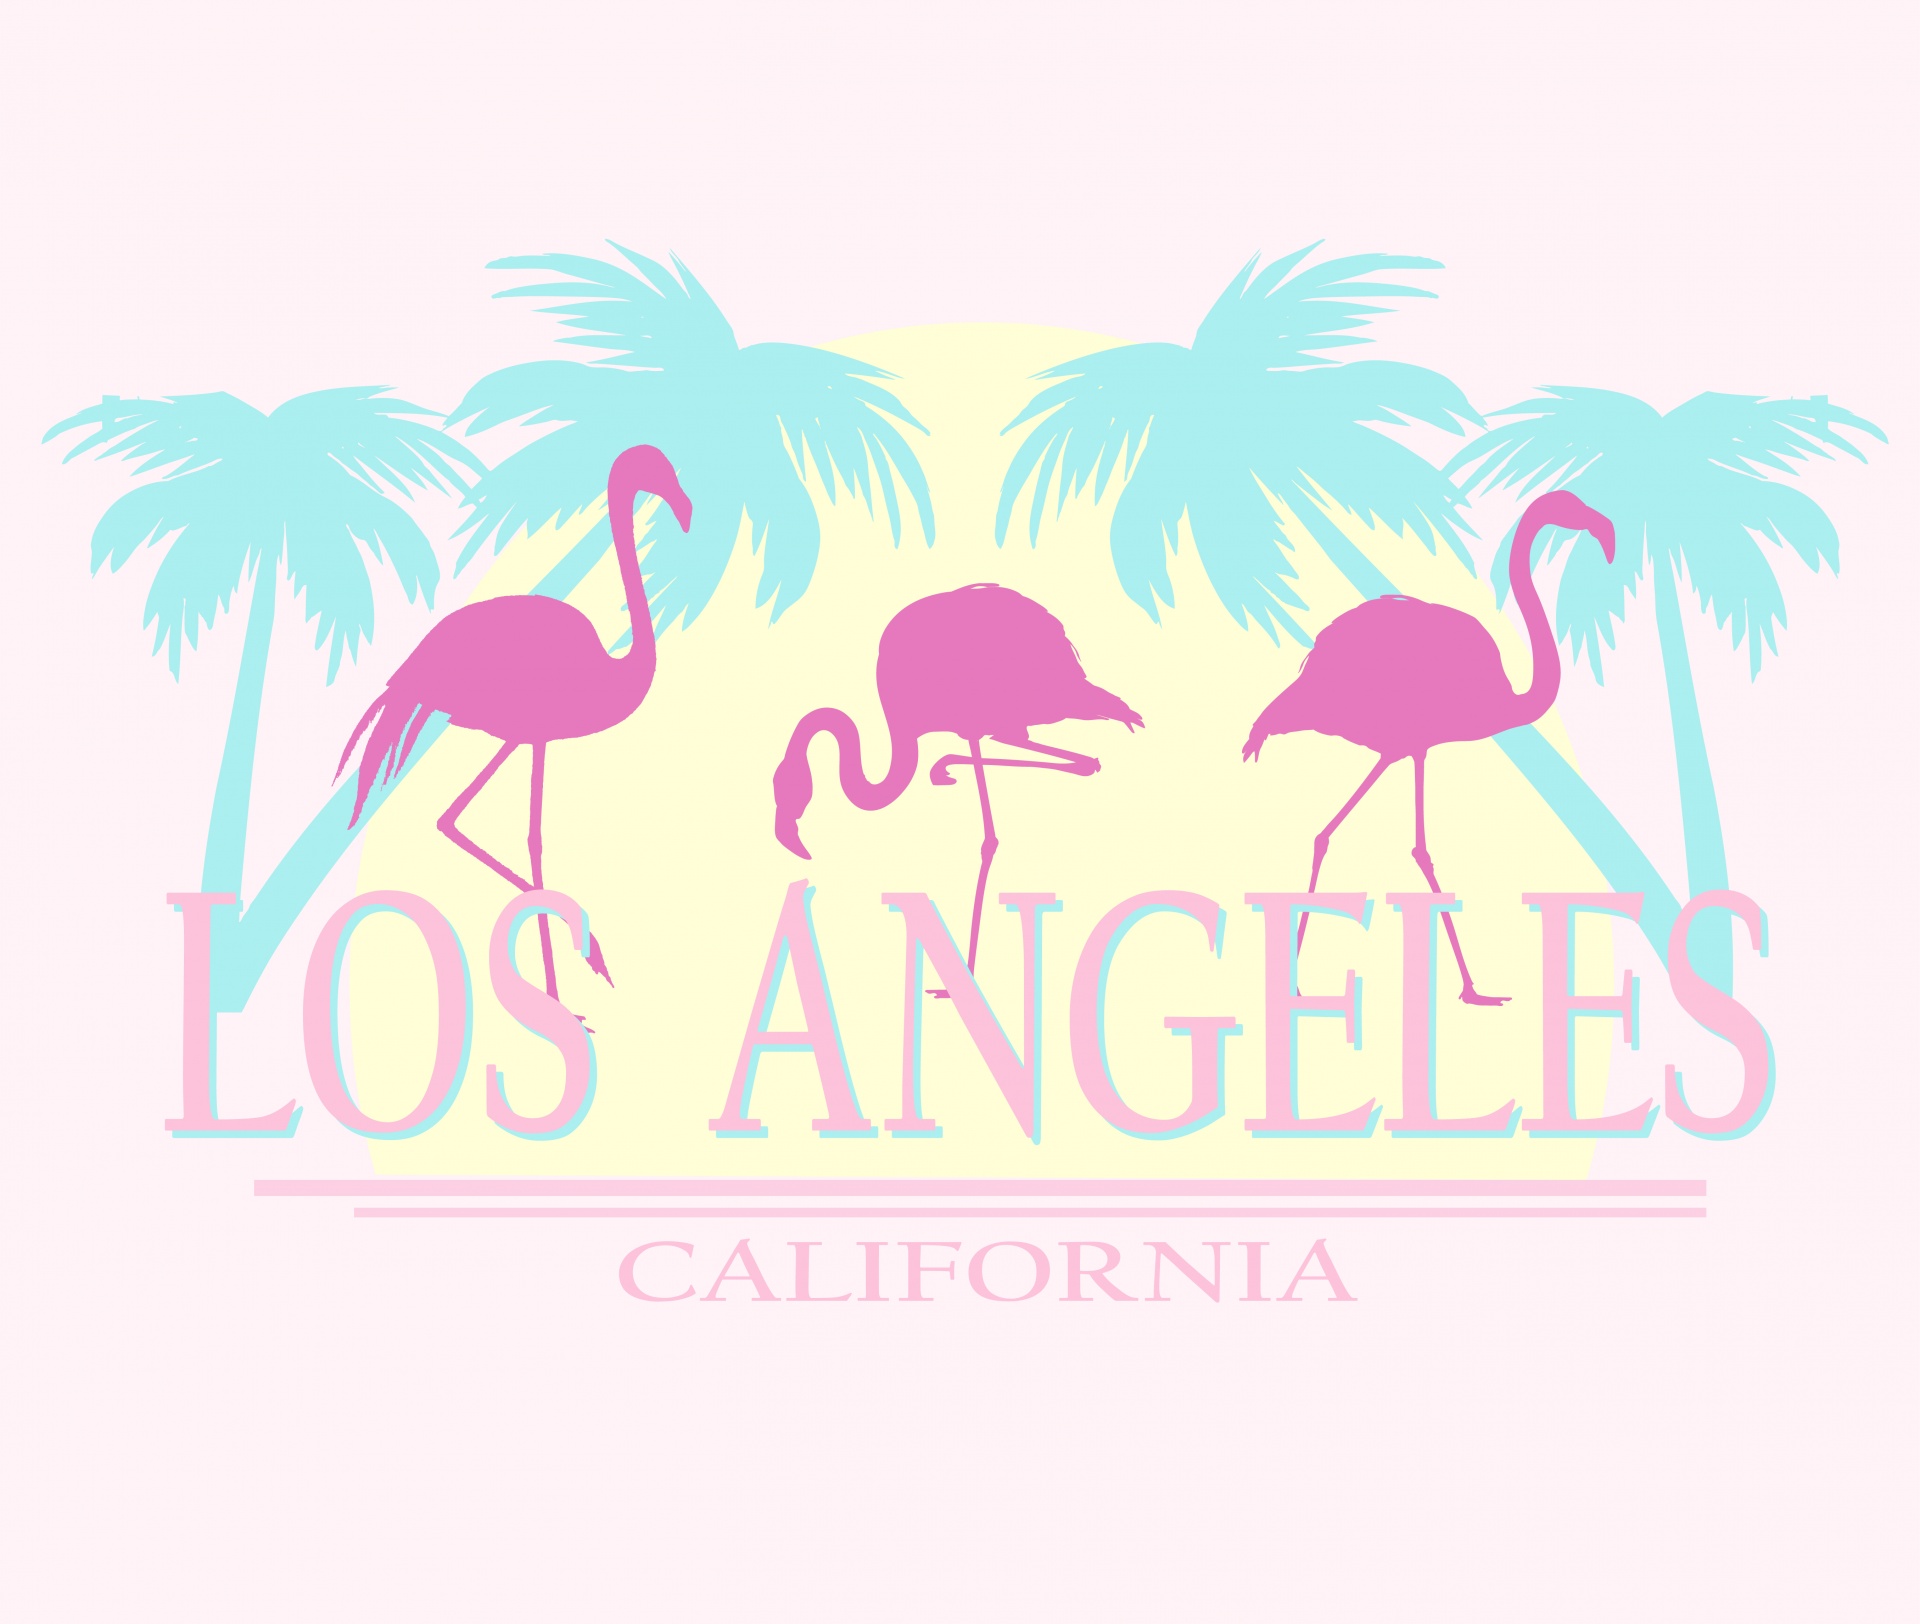 Los Angeles Flamingo Poster